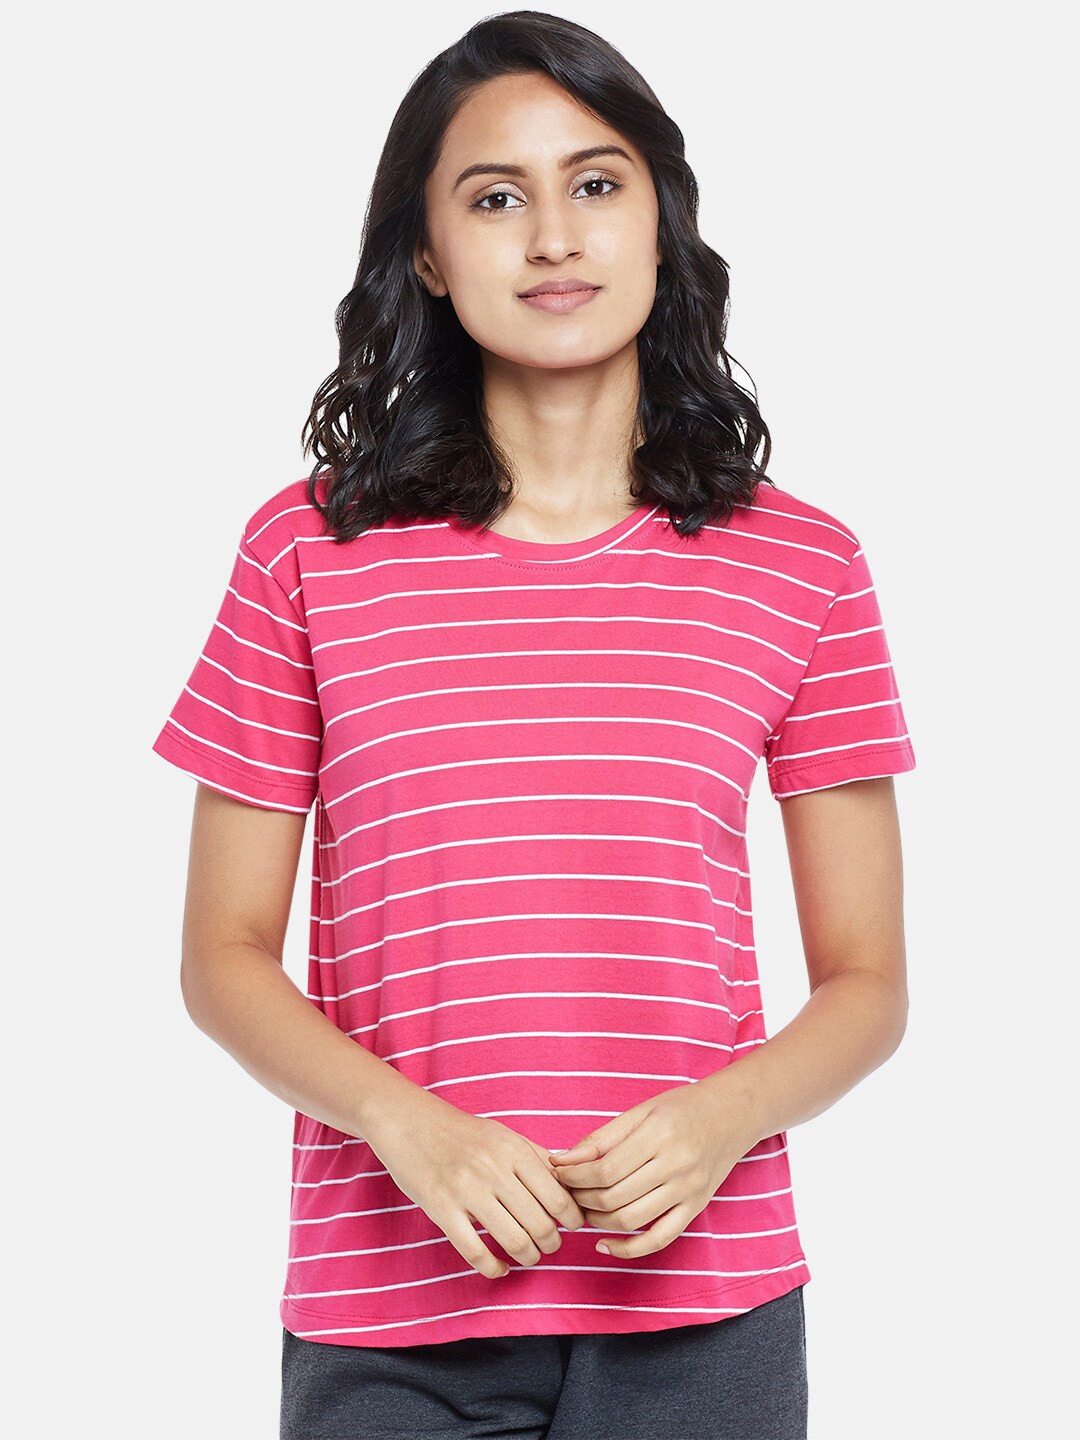 Dreamz by Pantaloons Pink & White Striped Regular Lounge tshirt Price in India